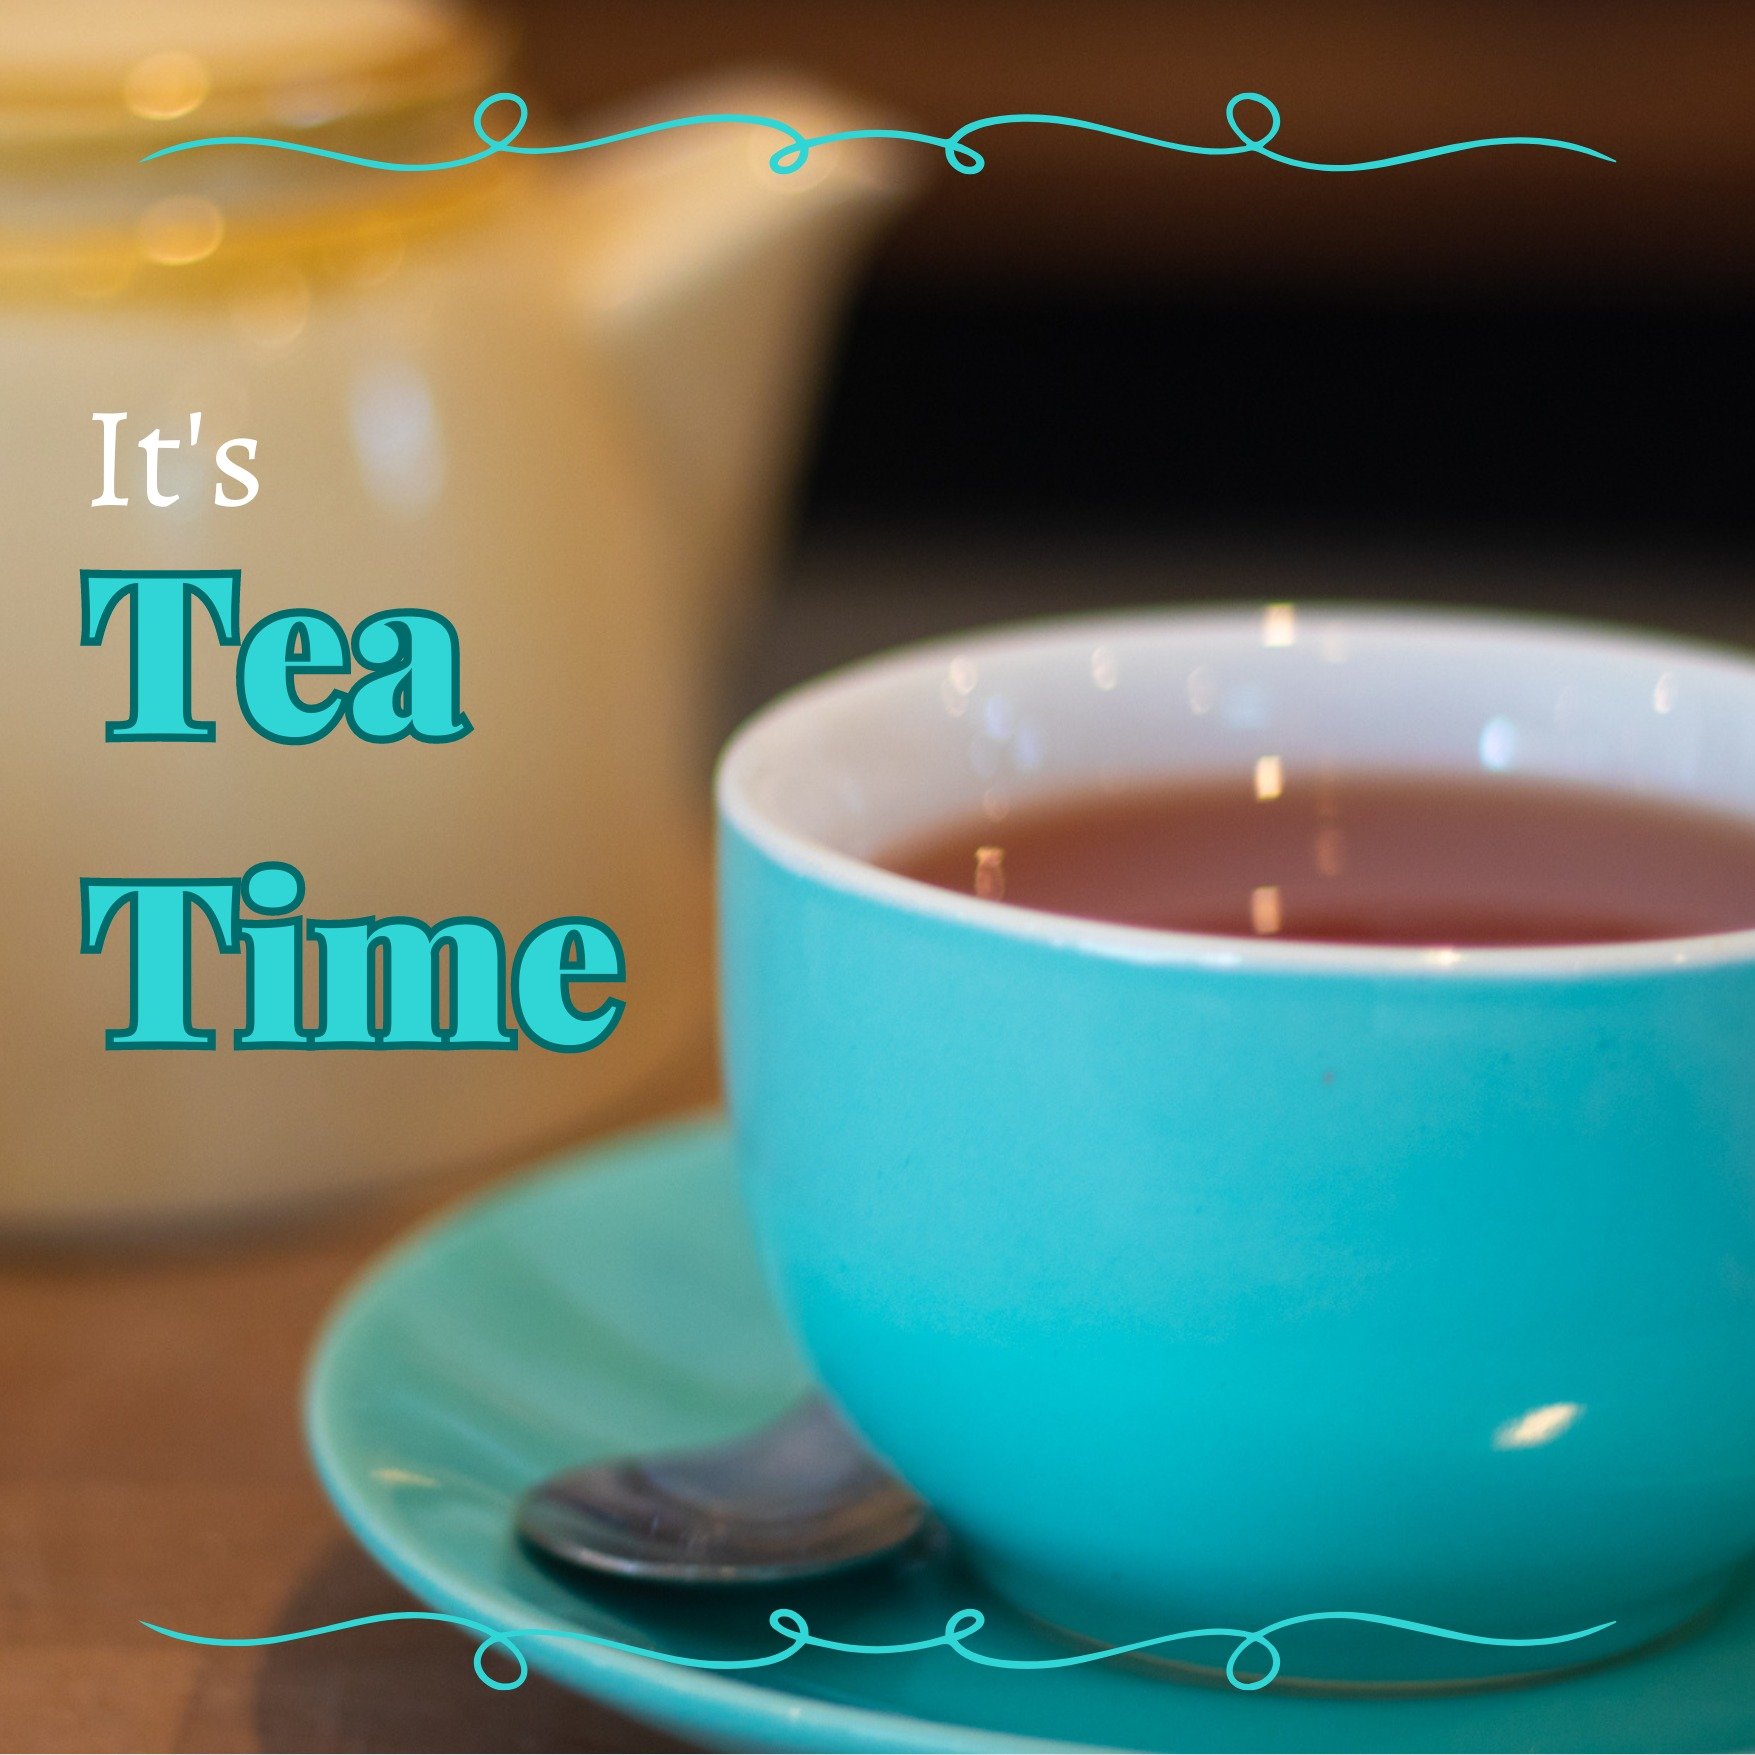 Let's have a tea party with all the amazing flavours: fruit tea, earl grey, breakfast tea! 🍵🍓🍊 It's tea time! 🎉
#TeaLoversUnite #TeaParty #SipSipHooray #coffeeshop #bristol